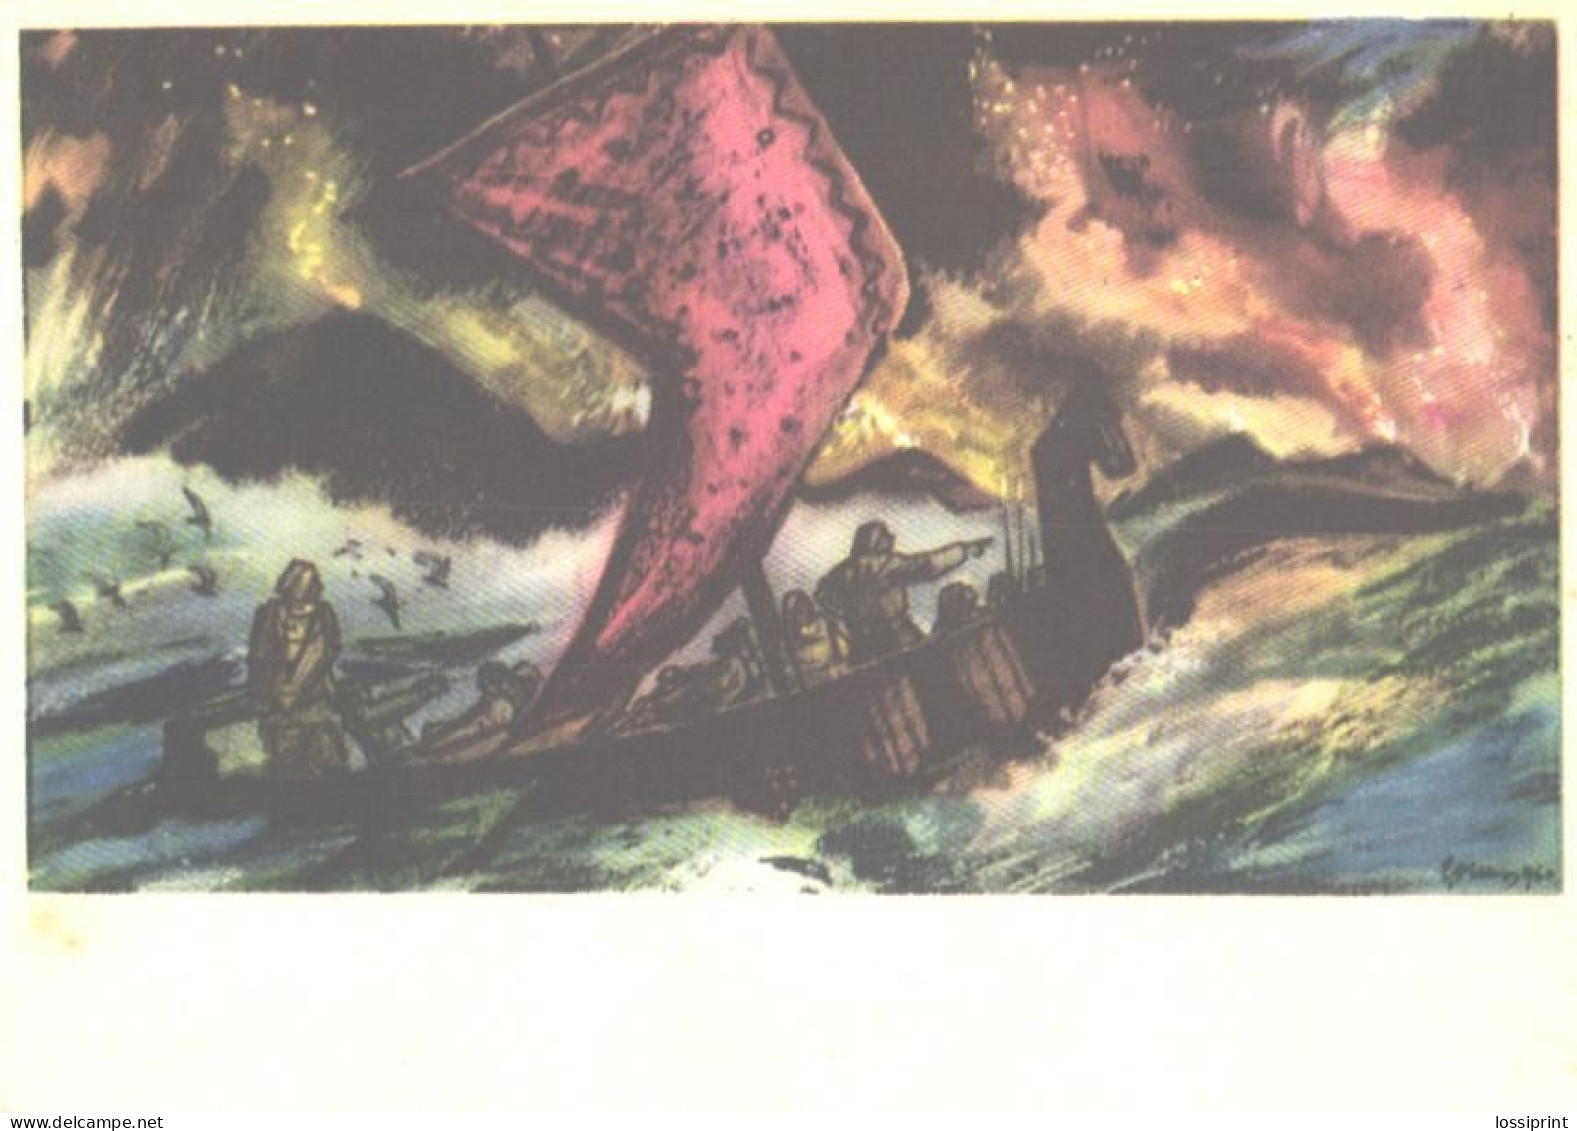 Estonian Epos Kalevipoeg, E.Okas, Jóurney To The End Of The World, Ship Lennuk, 1961 - Fairy Tales, Popular Stories & Legends